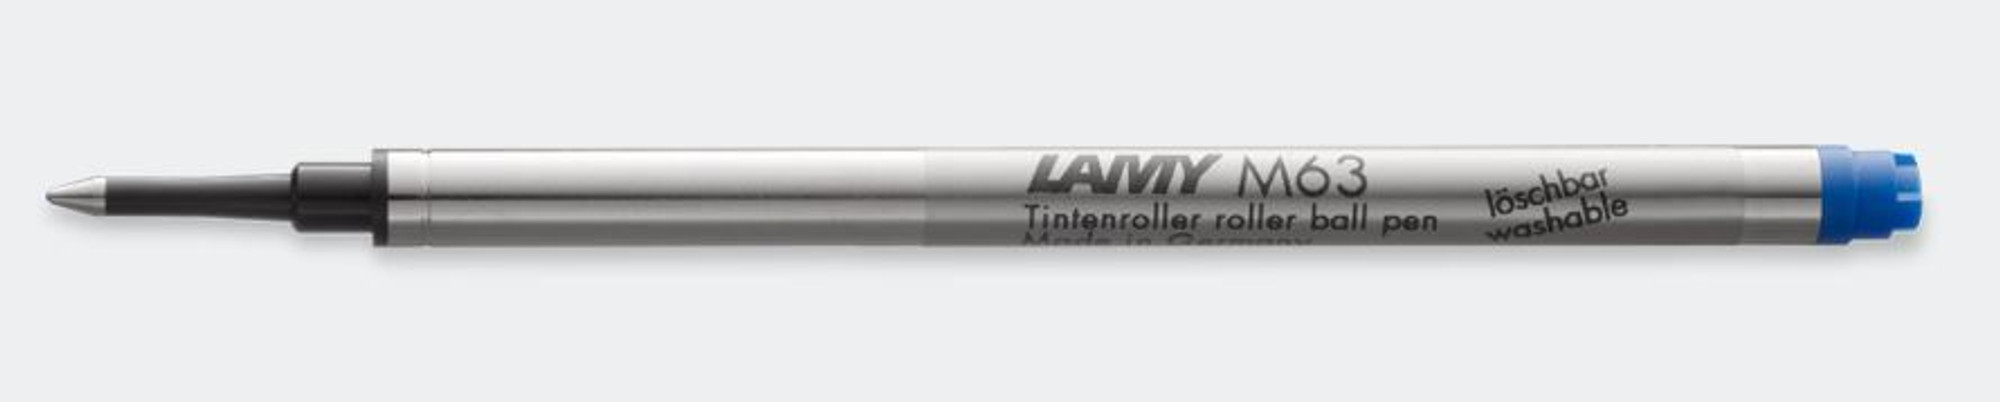 Lamy M63 Rollerball Refill - Blue